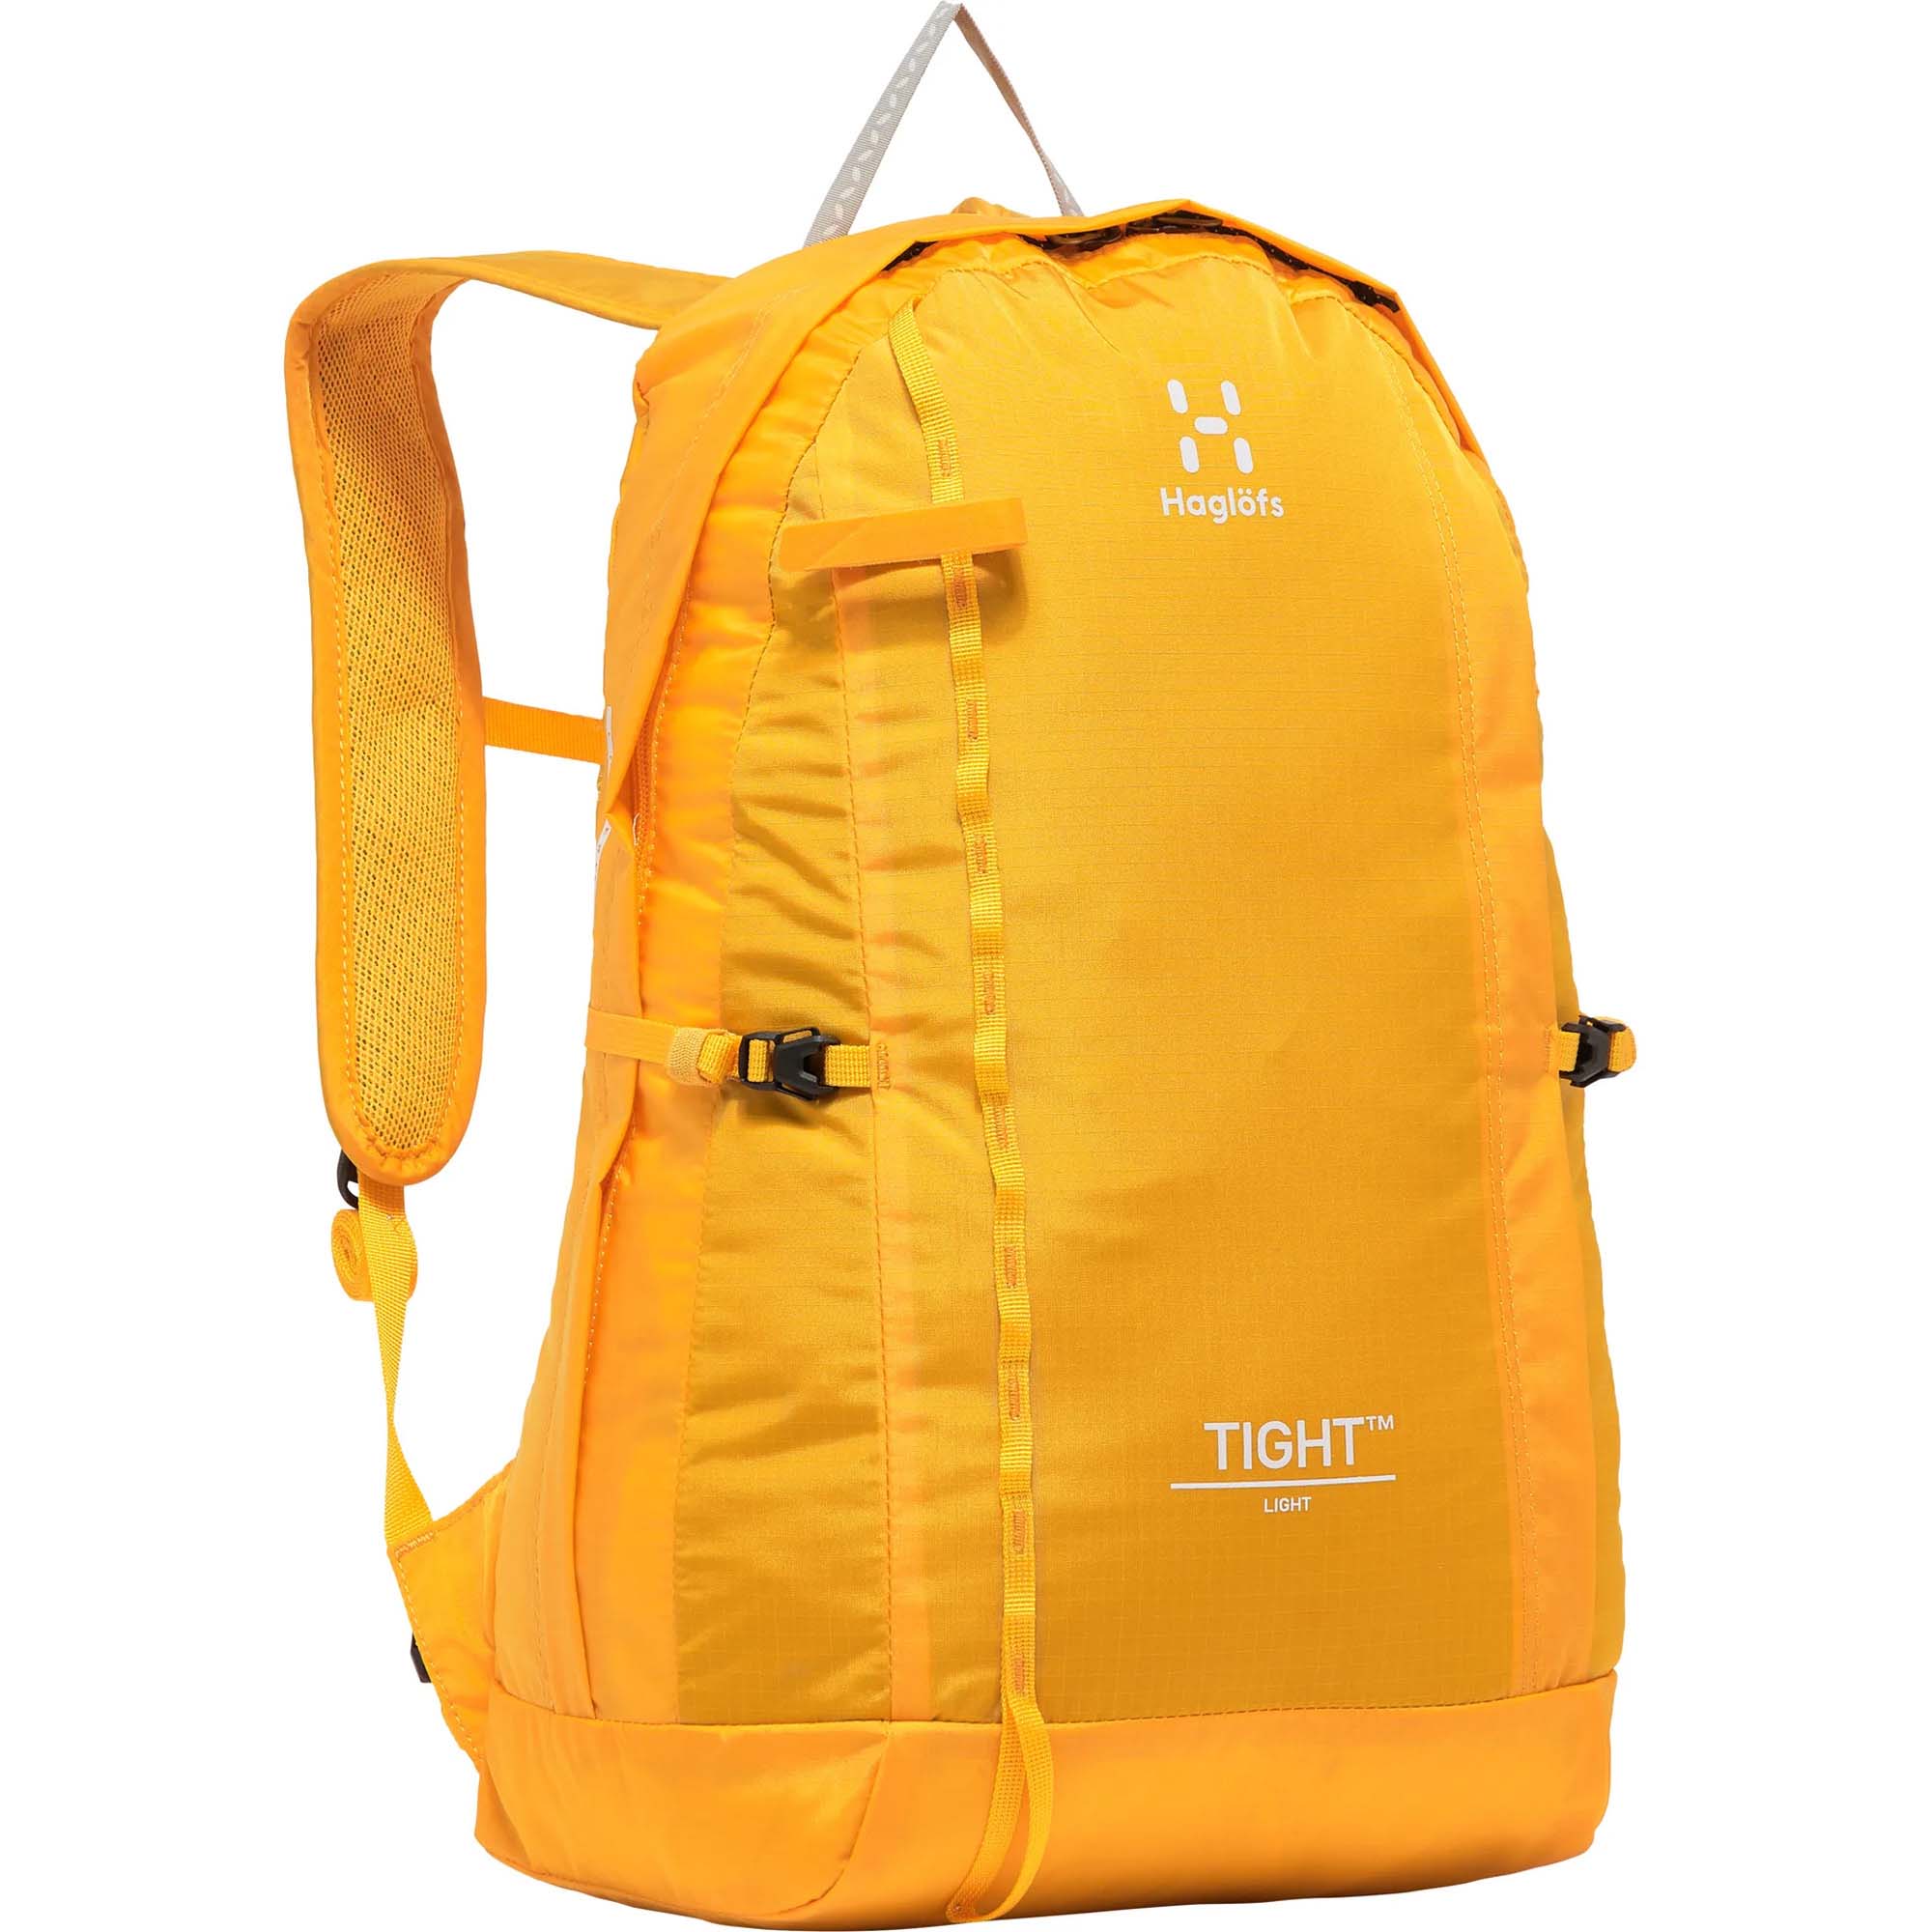 Haglofs L.I.M Tight Light 13 Backpack/Day Pack